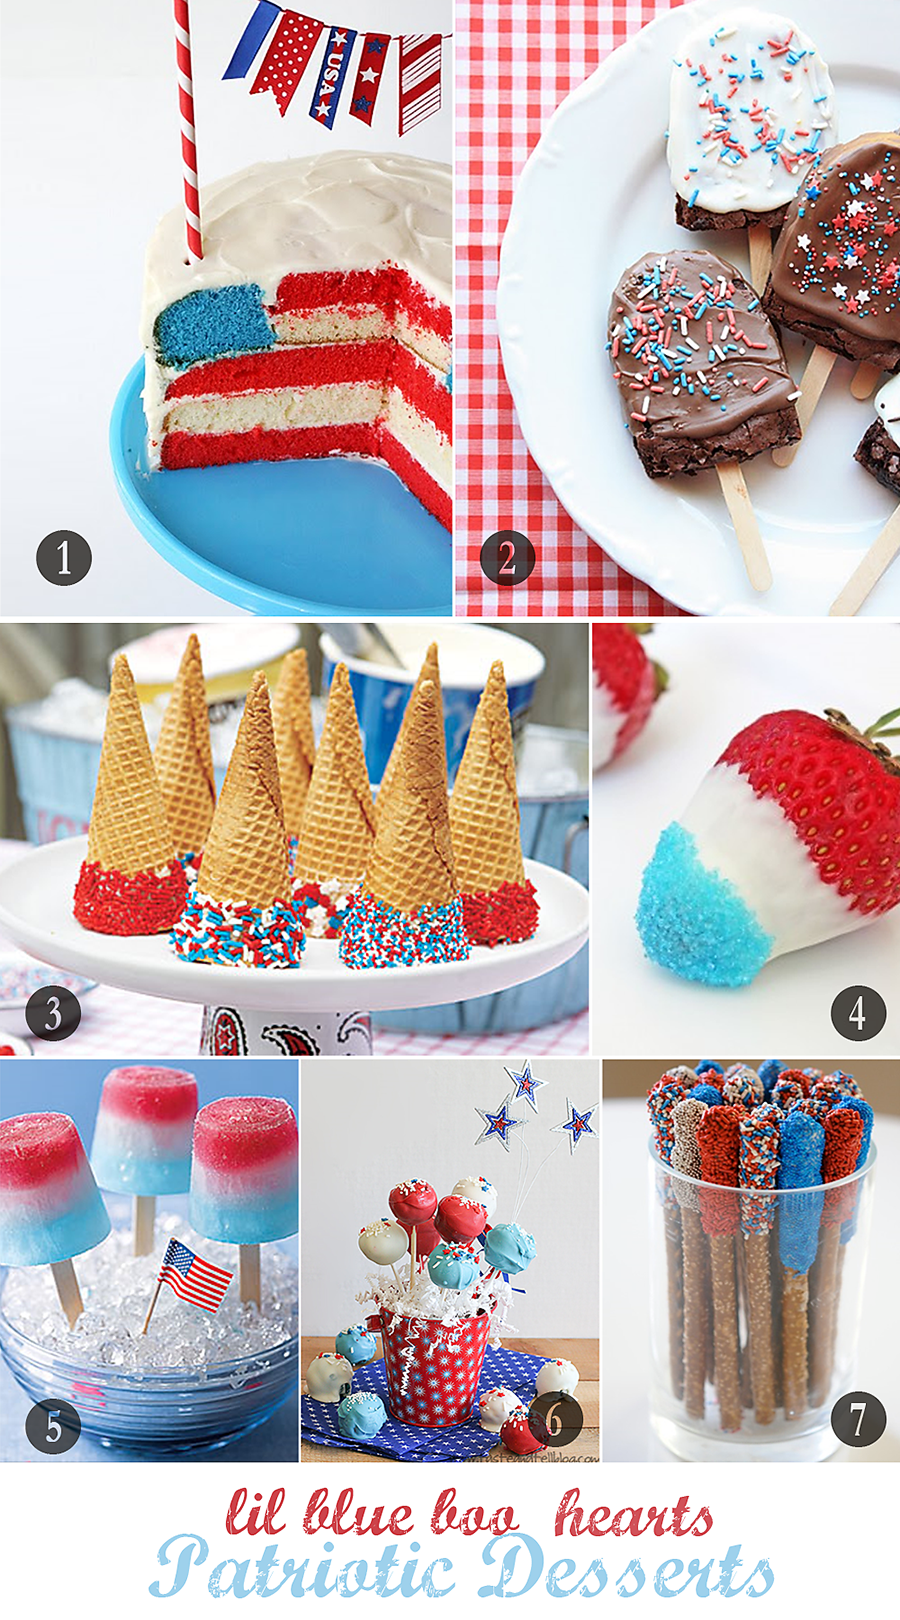 Patriotic dessert ideas and recipes (4th of July) via lilblueboo.com